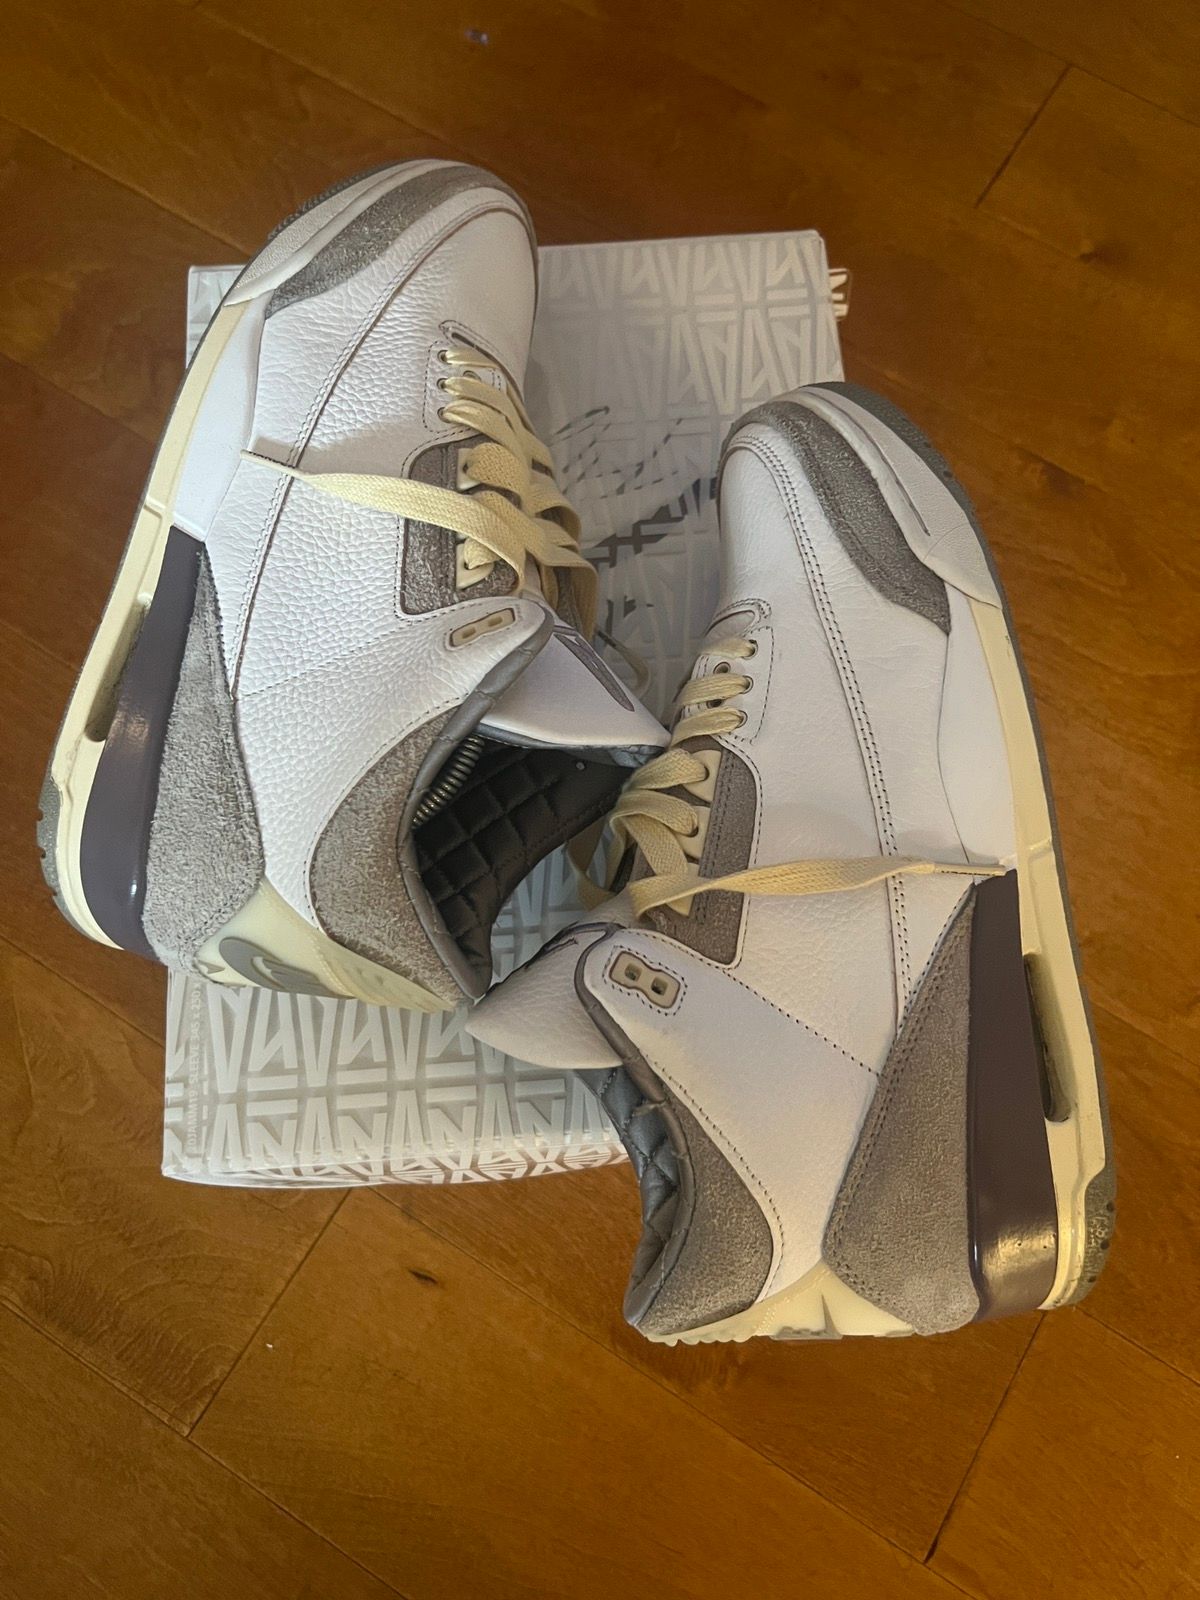 Pre-owned Jordan Nike Jordan 3 Retro A Ma Maniere Shoes In White